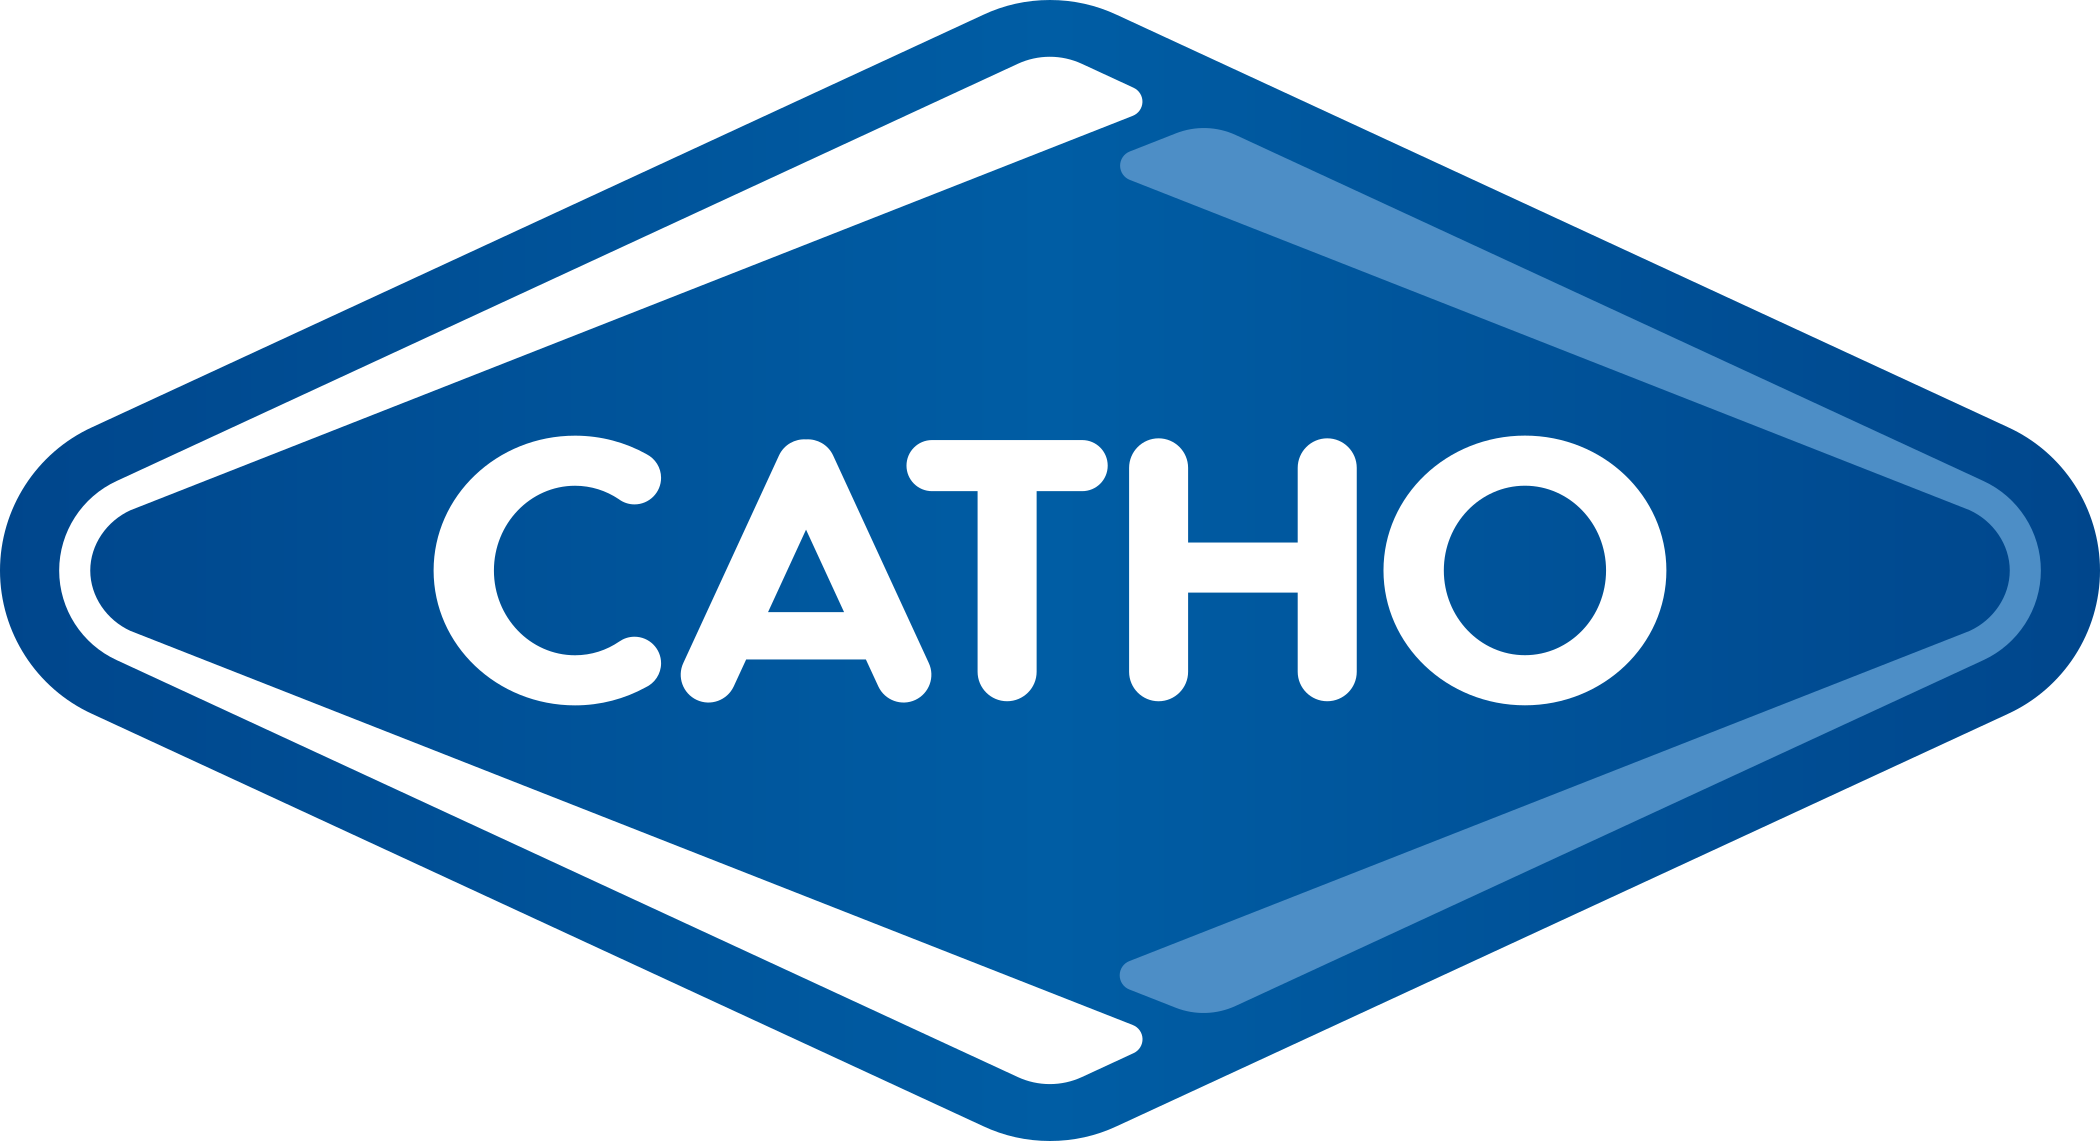 Catho Logo.